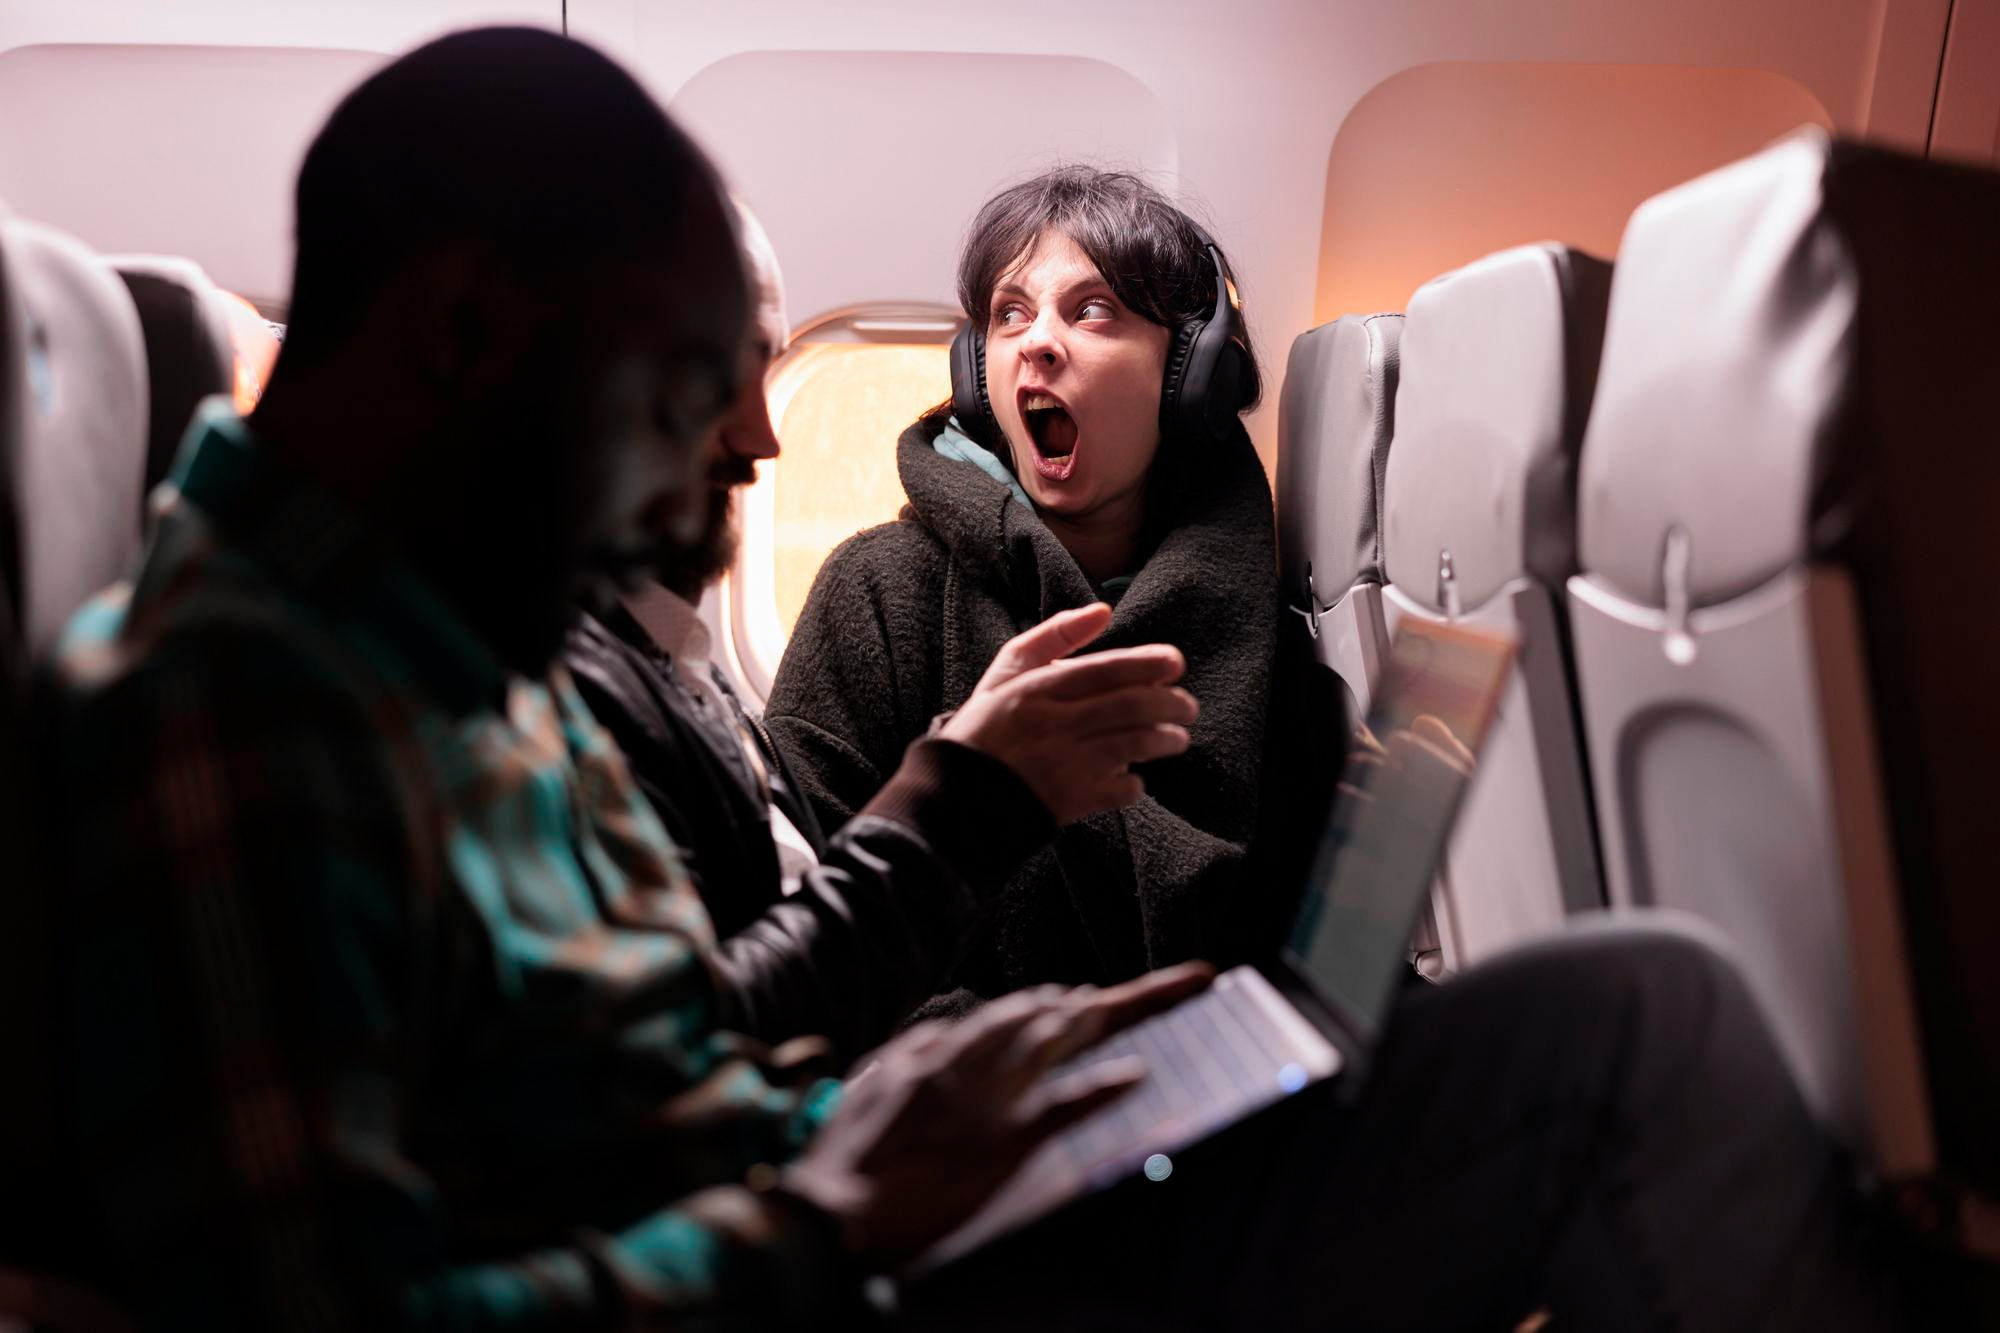 An upset woman wearing headset while screaming on a flight | Source: Freepik